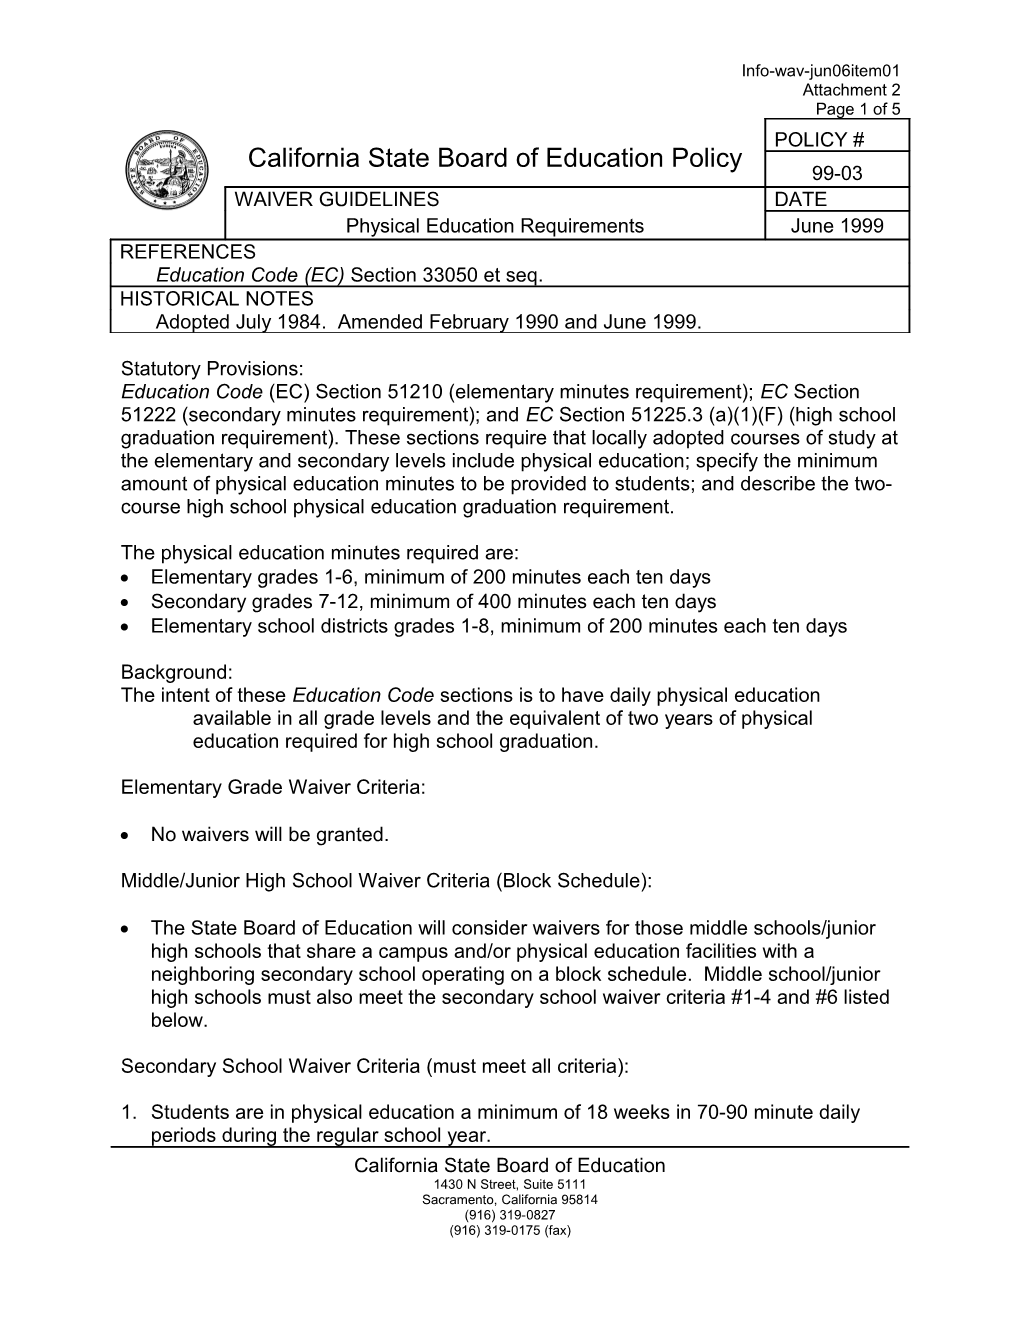 June 2006 Waiver Item 01 Attachment 2 - Information Memorandum (CA State Board of Education)